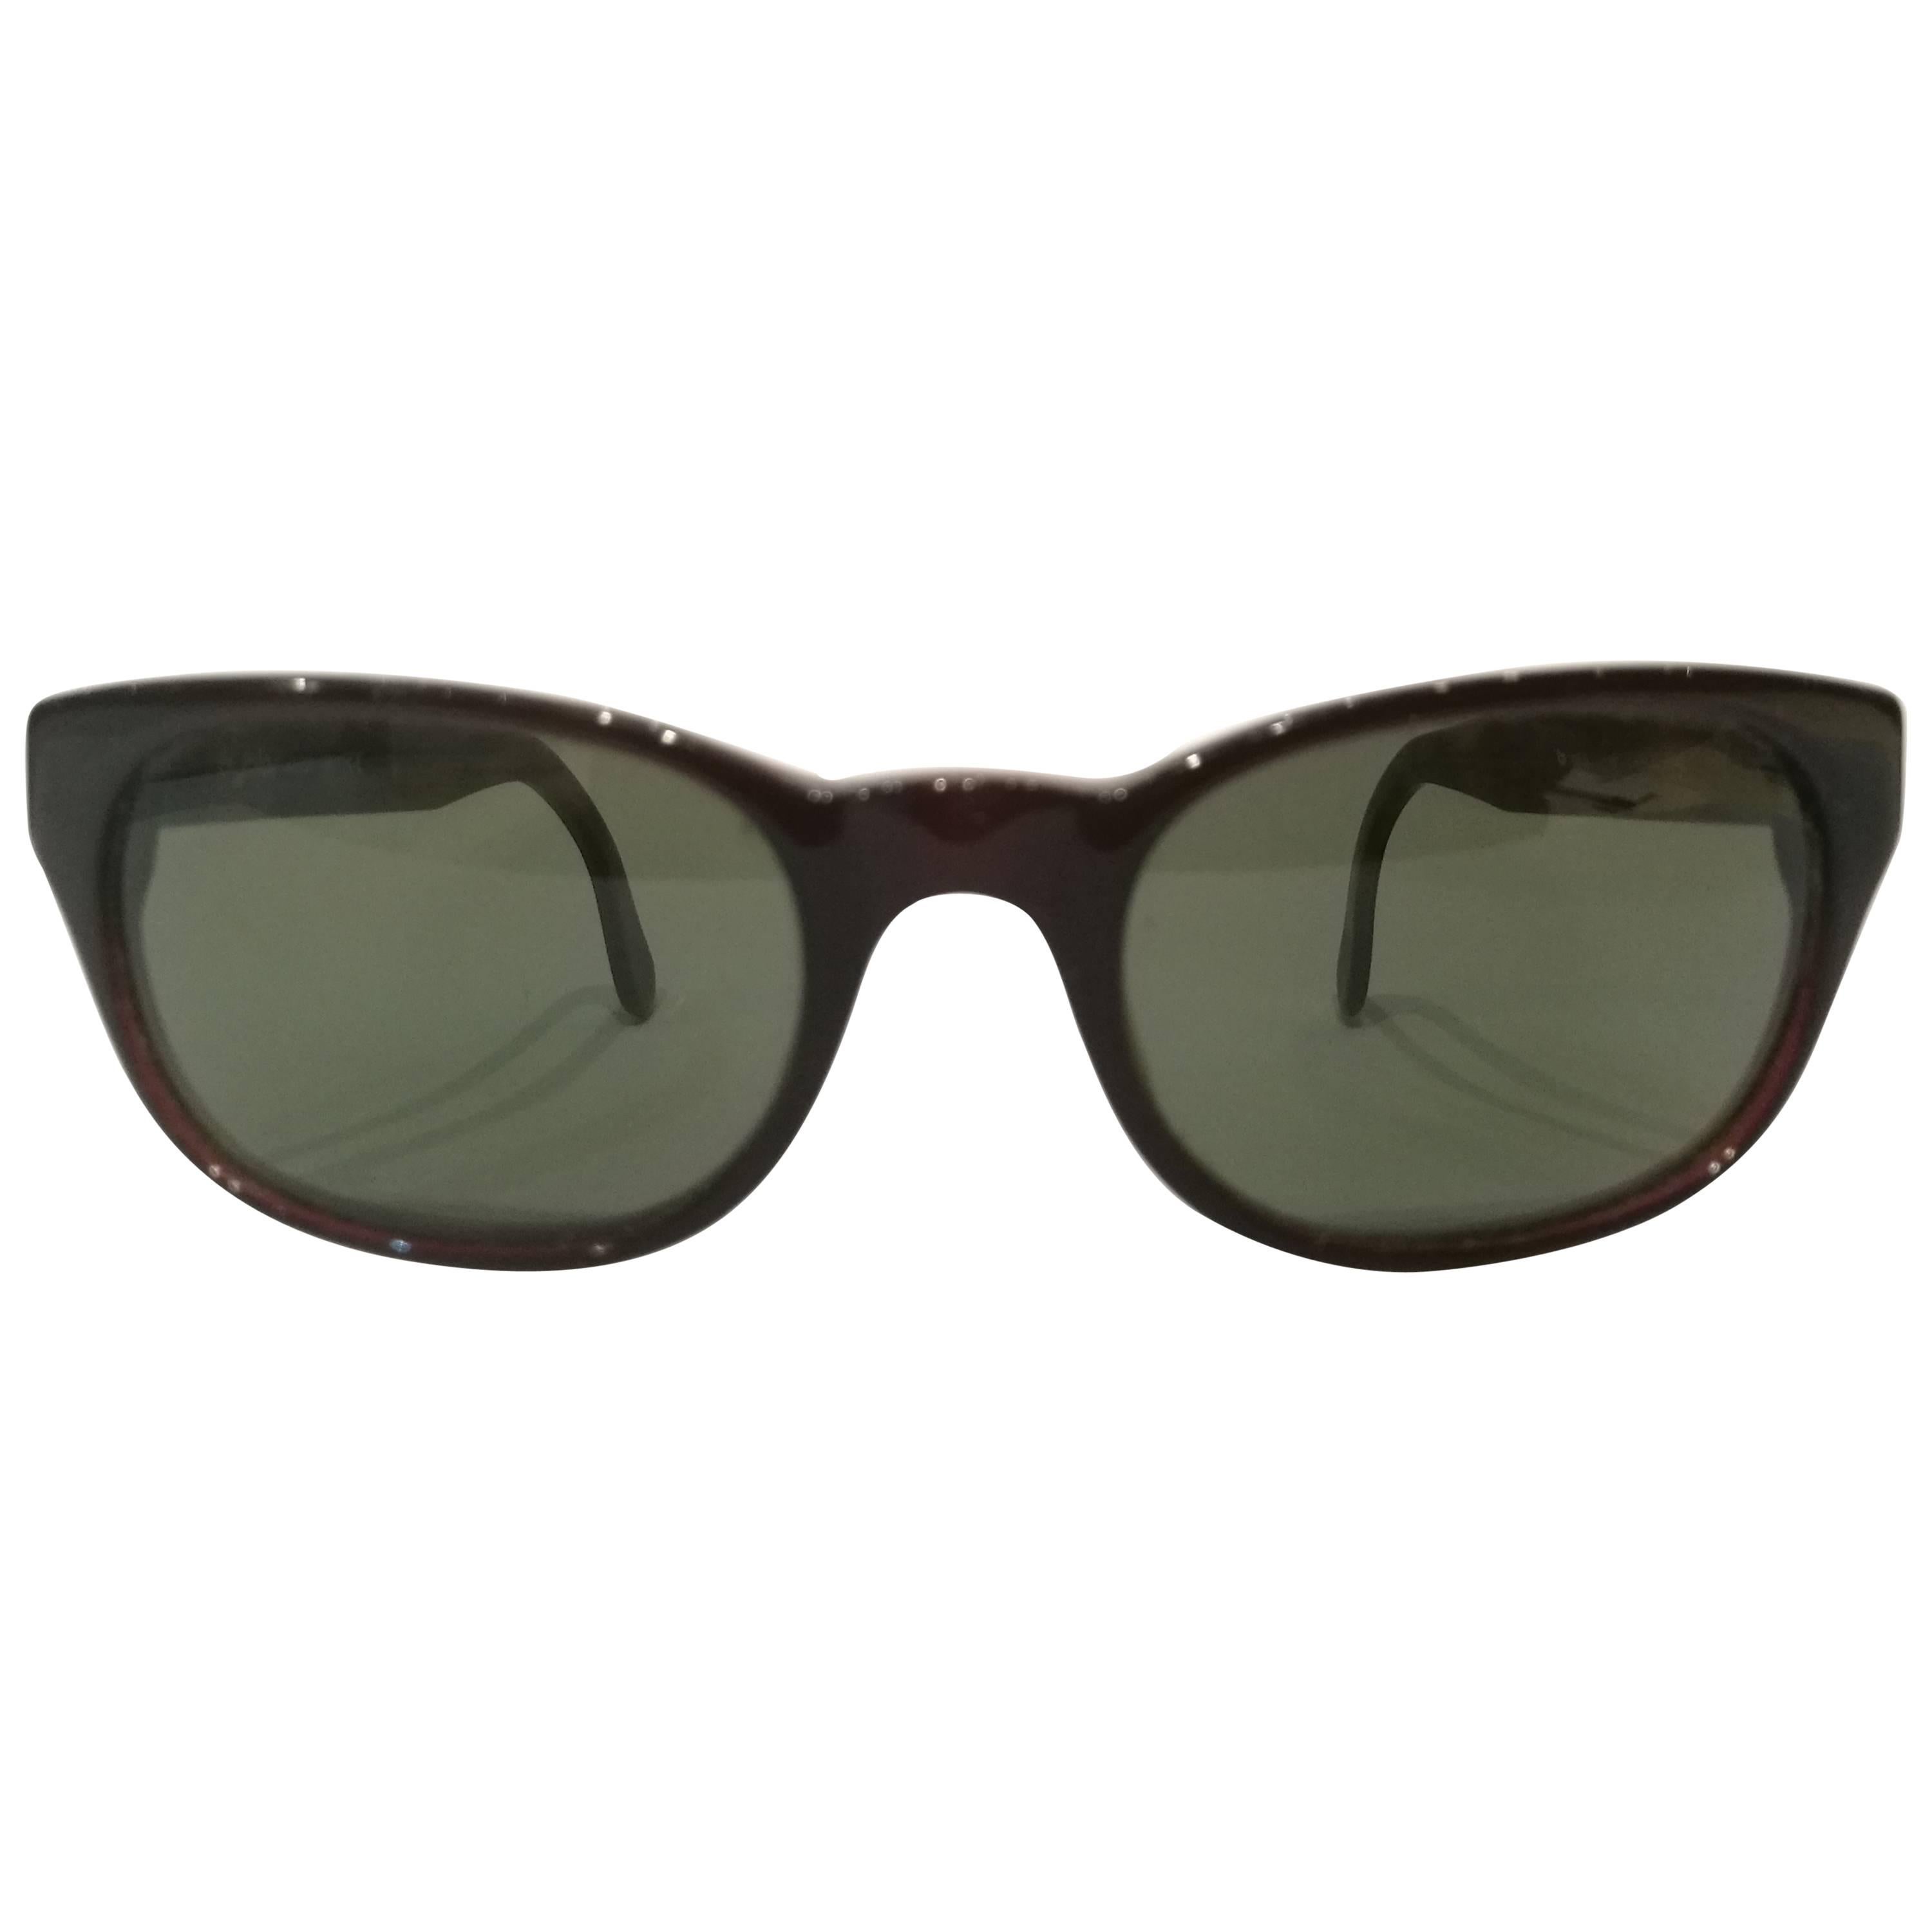 Byblos brown sunglasses